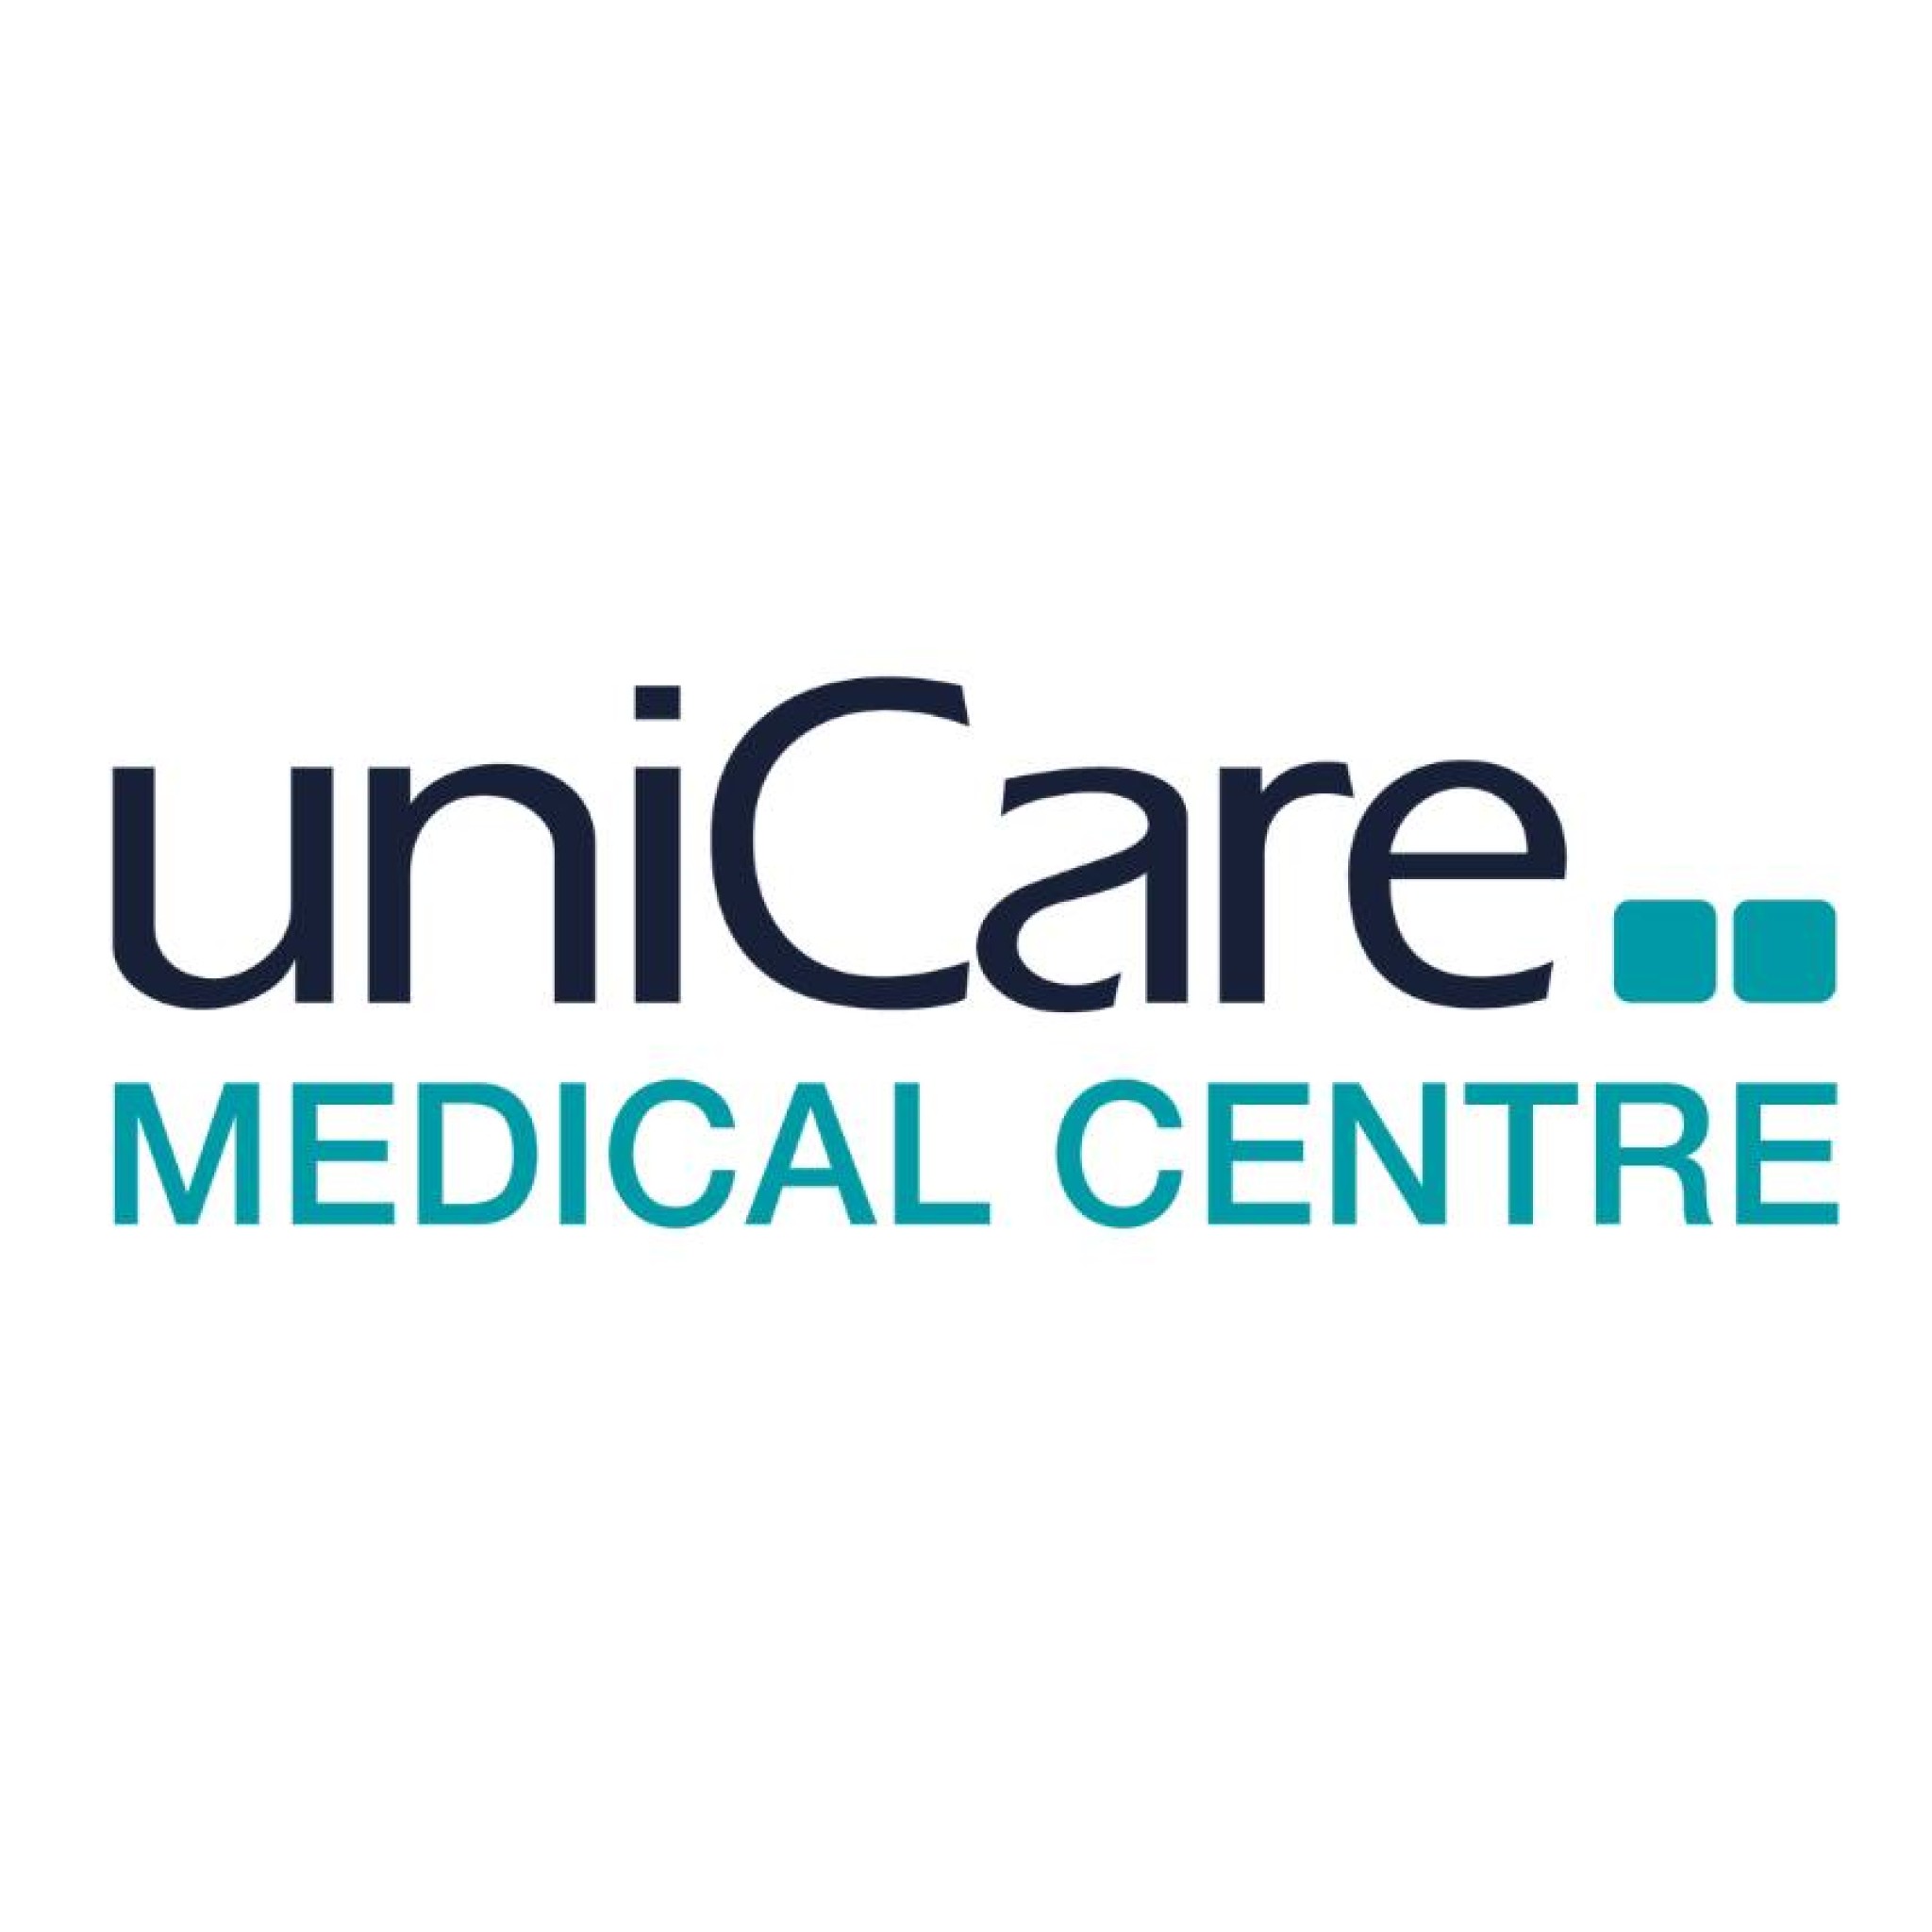 Unicare Medical Center